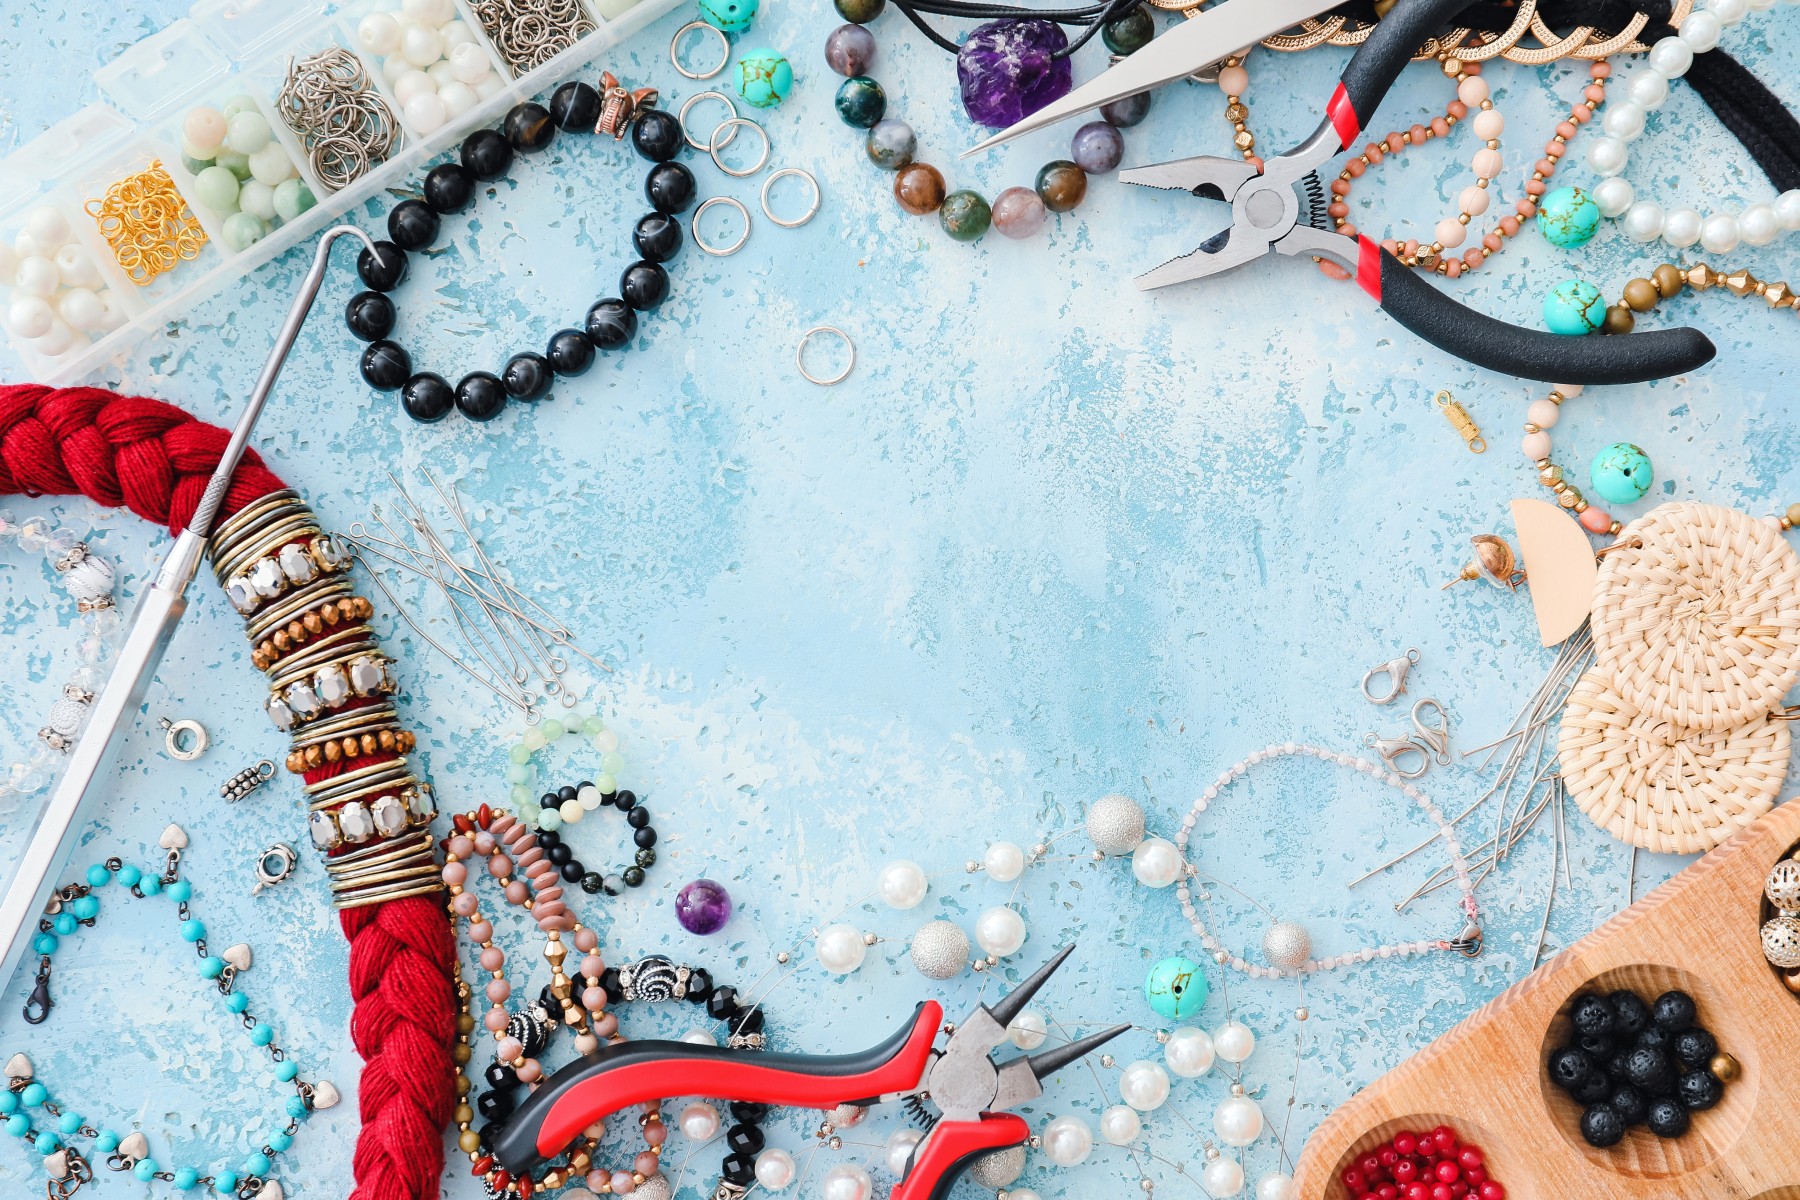 Best jewelry making classes: Make one-of-a-kind handmade jewelry